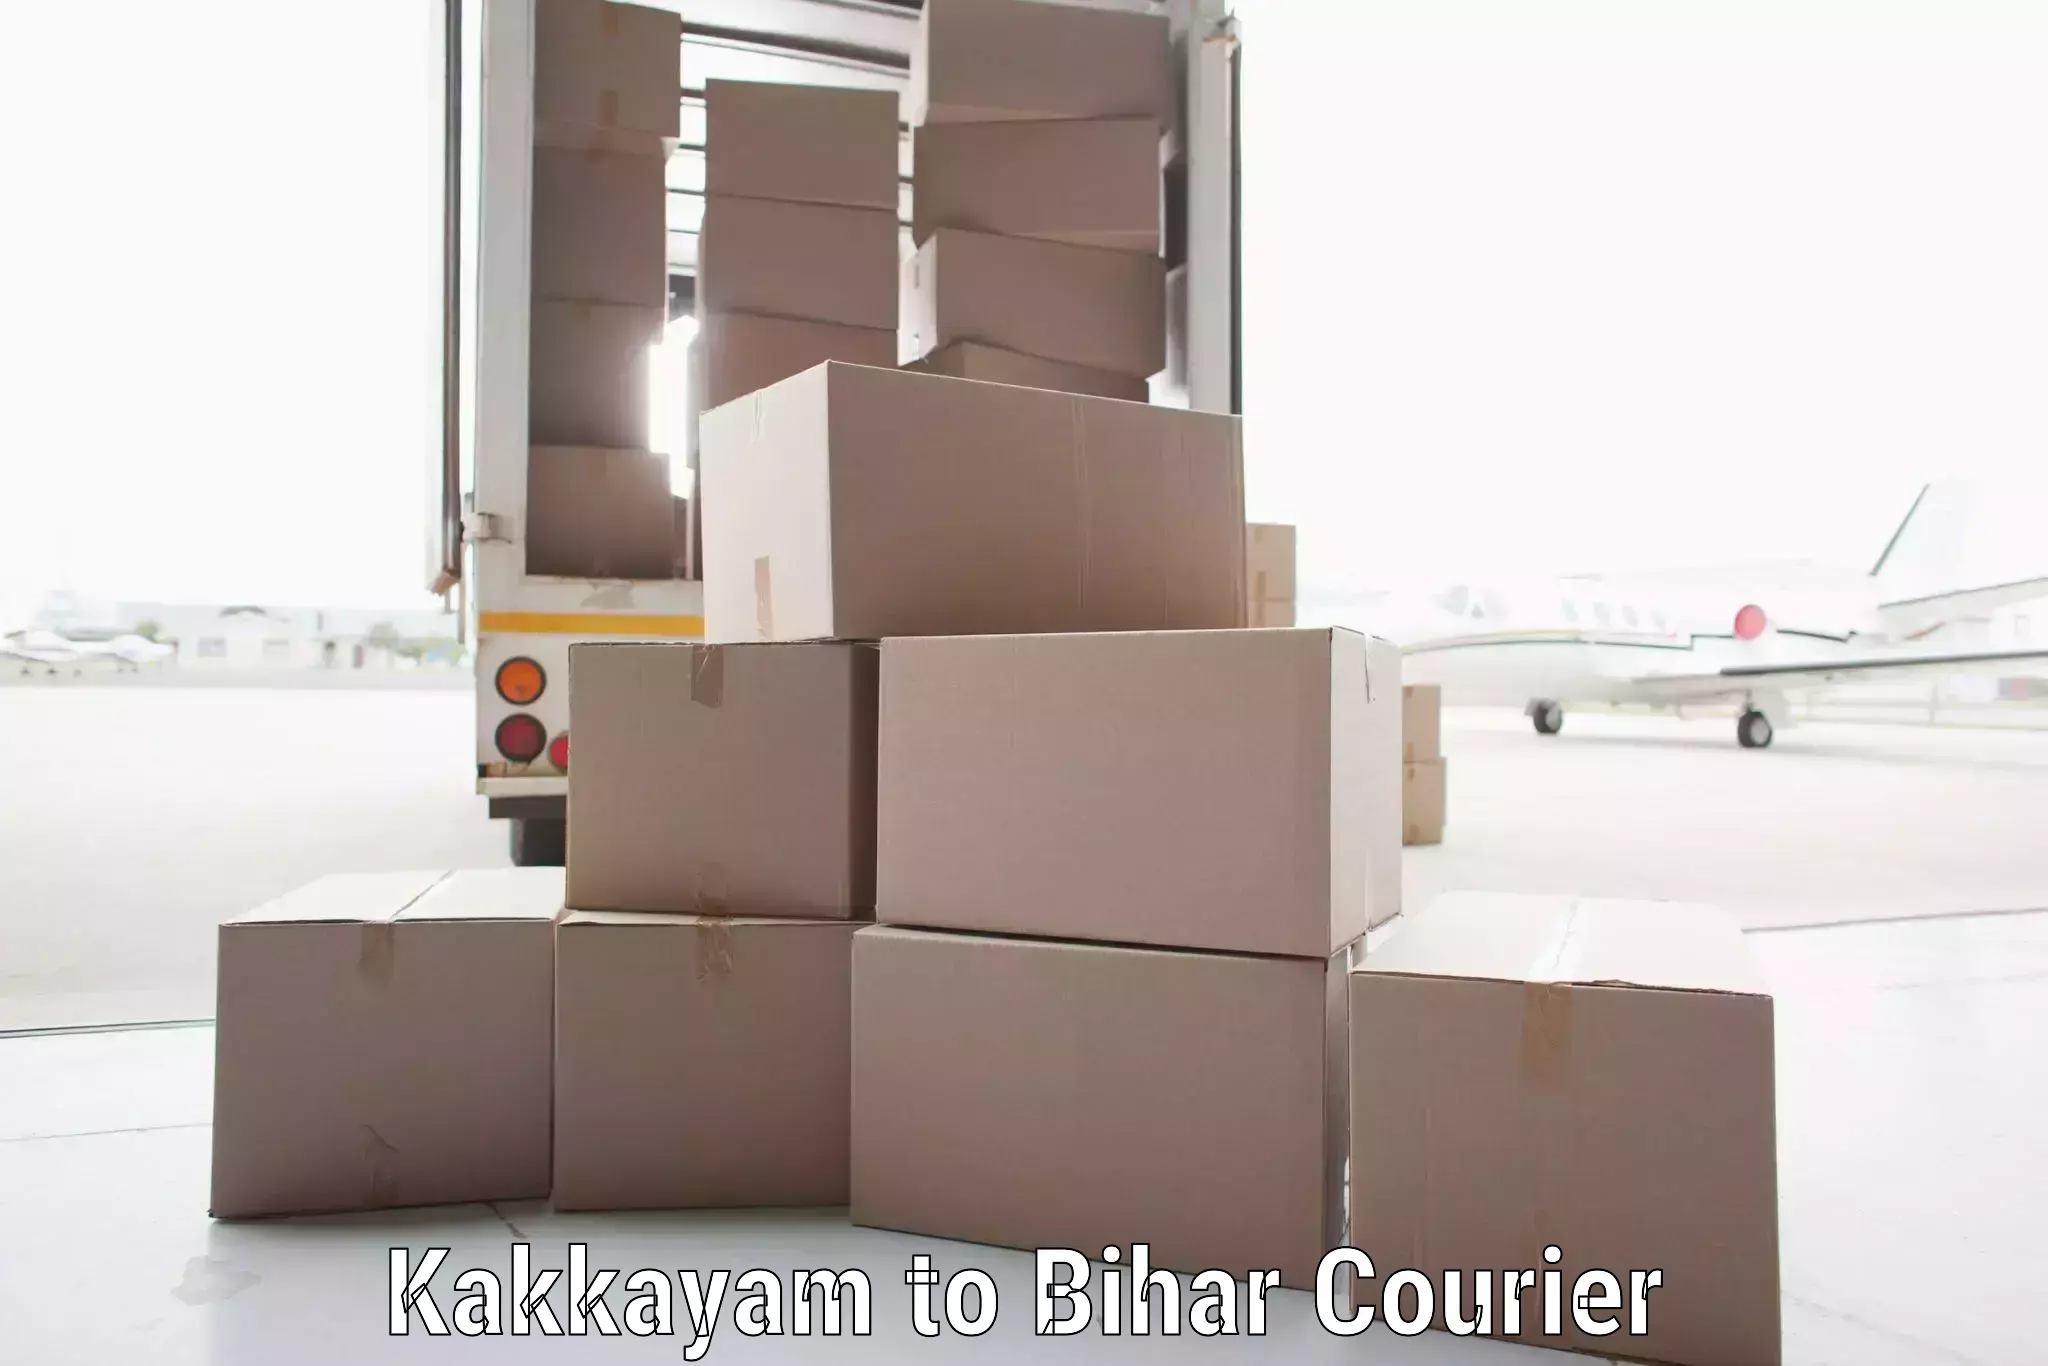 Courier service comparison Kakkayam to Kochas